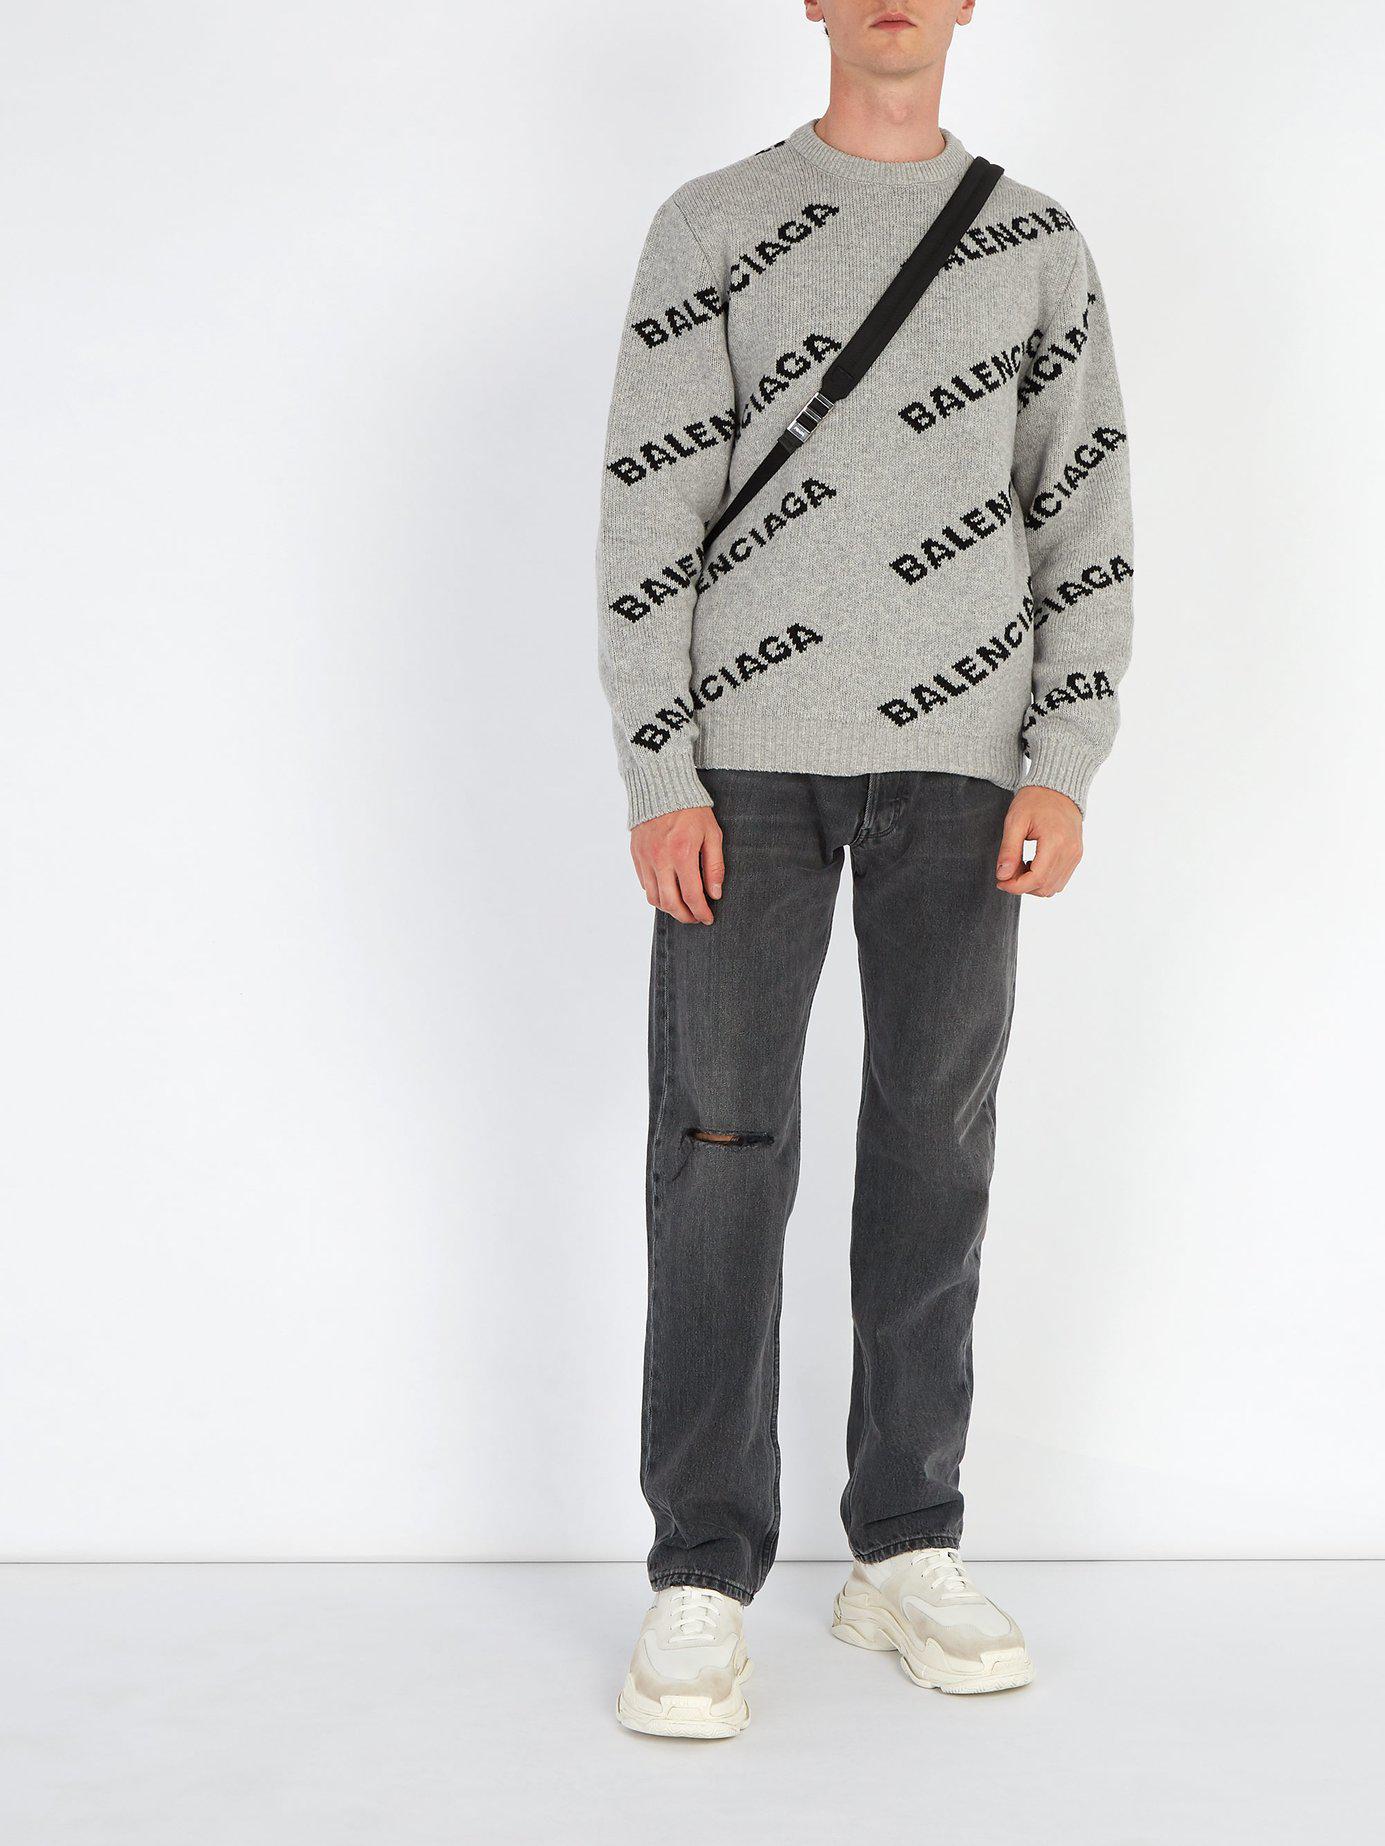 Balenciaga Wool Logo Crew Neck Sweater in Grey (Gray) for Men - Lyst